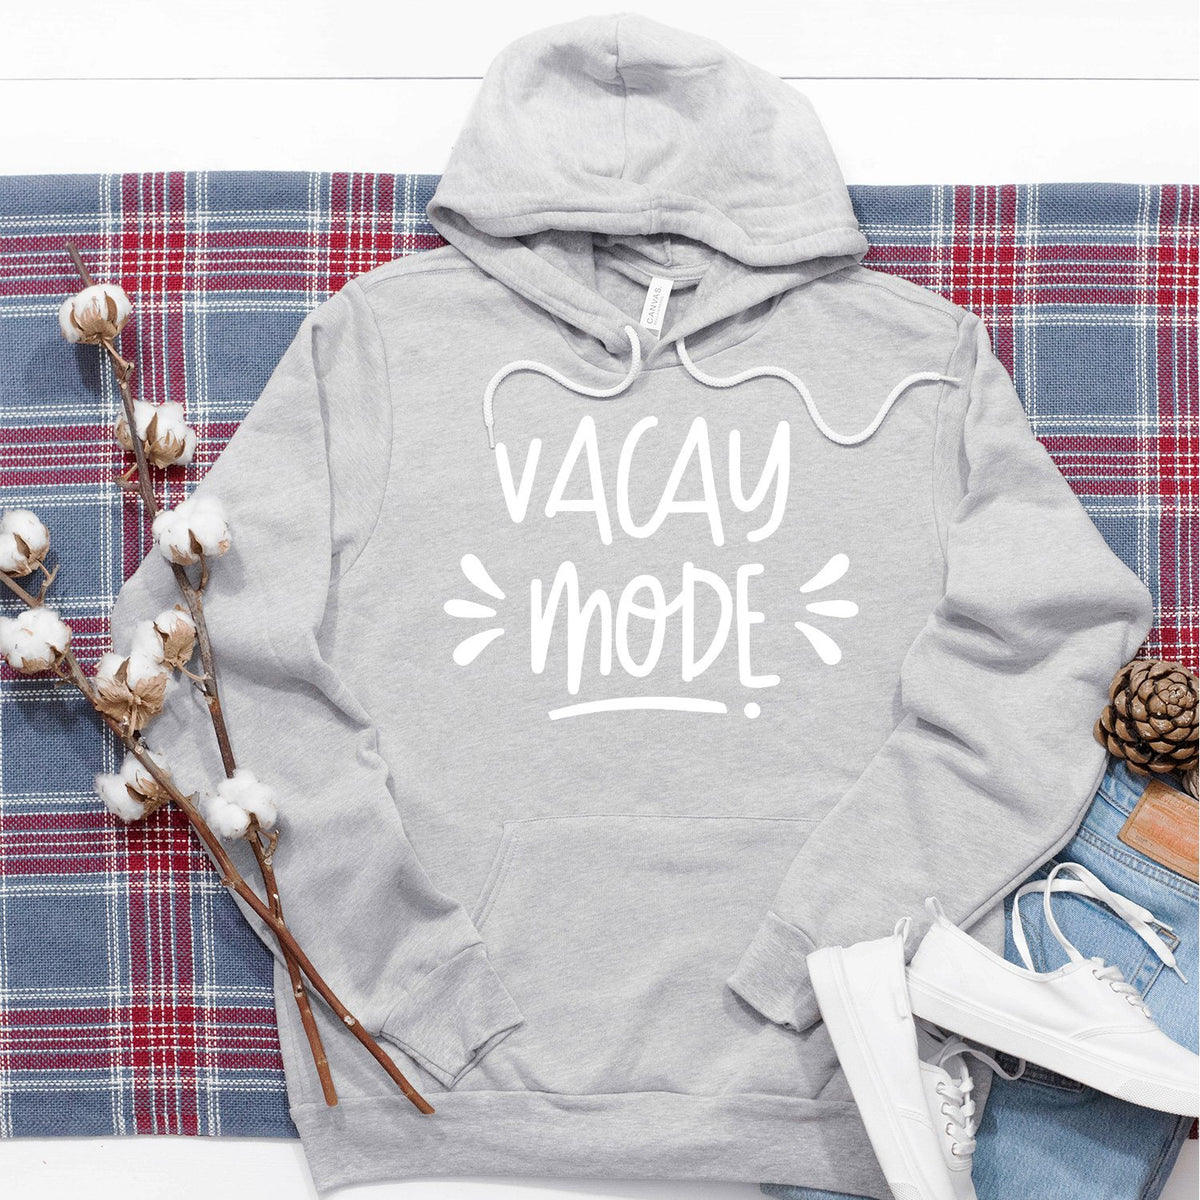 Vacay Mode - Hoodie Sweatshirt